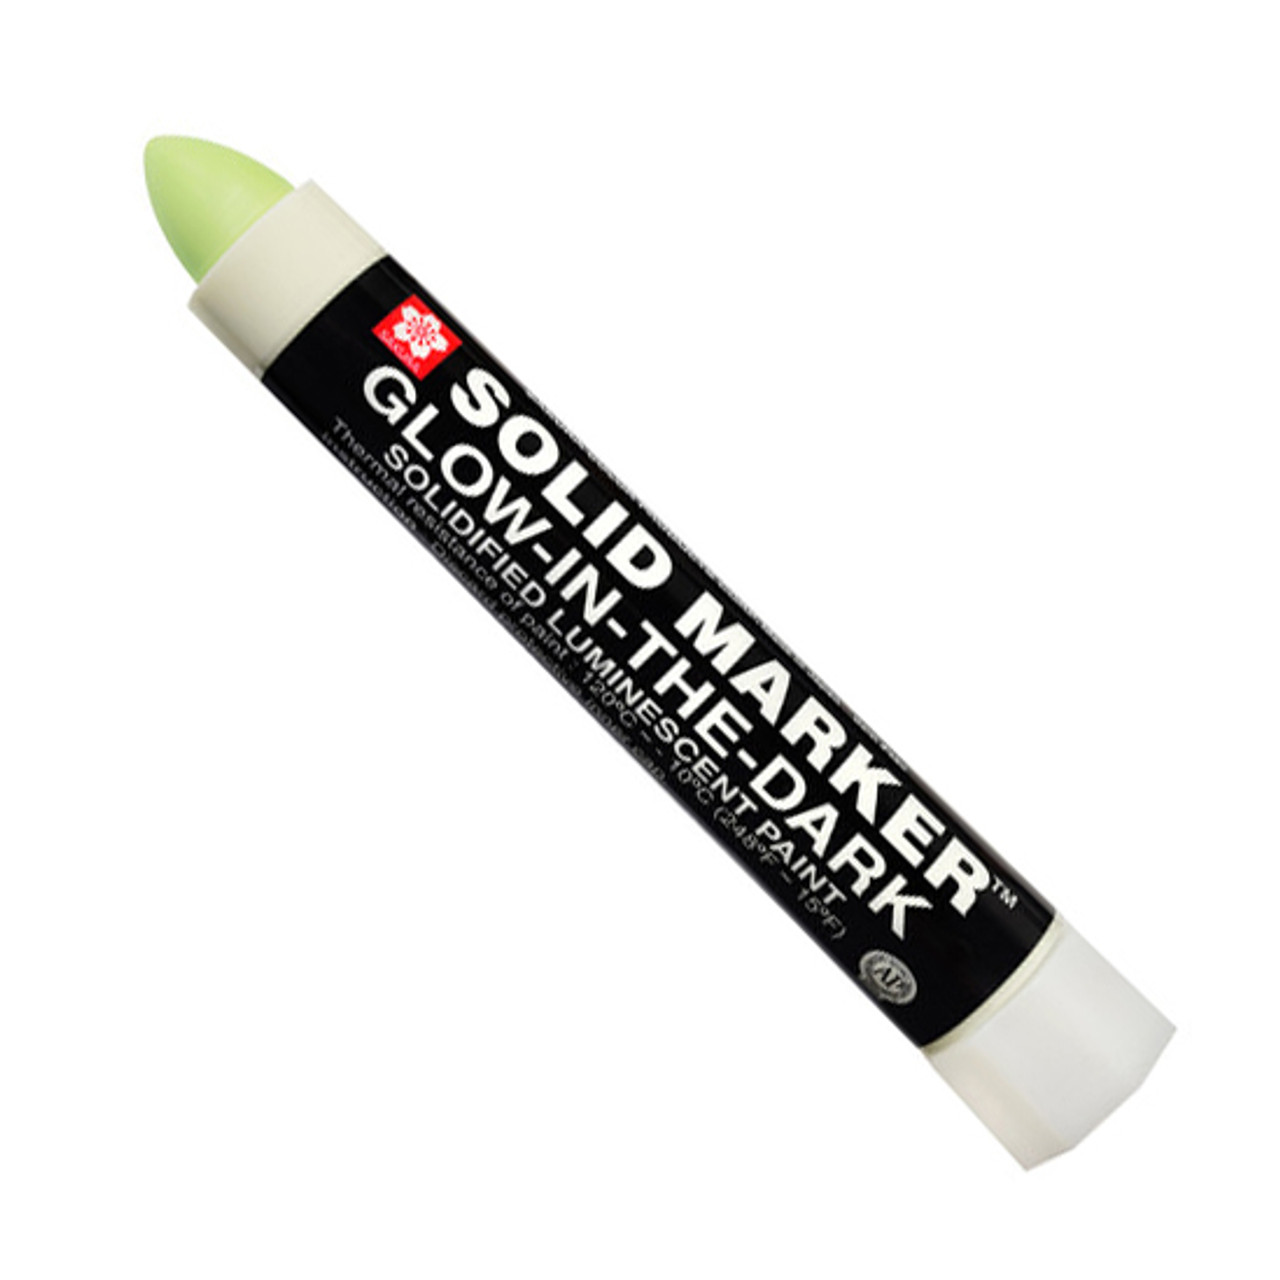  SAKURA Solid Glow-In-the-Dark Paint Markers - Permanent Marker  Paint Pens - Window, Wood, & Glass Marker - Glow In the Dark Paint - 1 Pack  : Arts, Crafts & Sewing